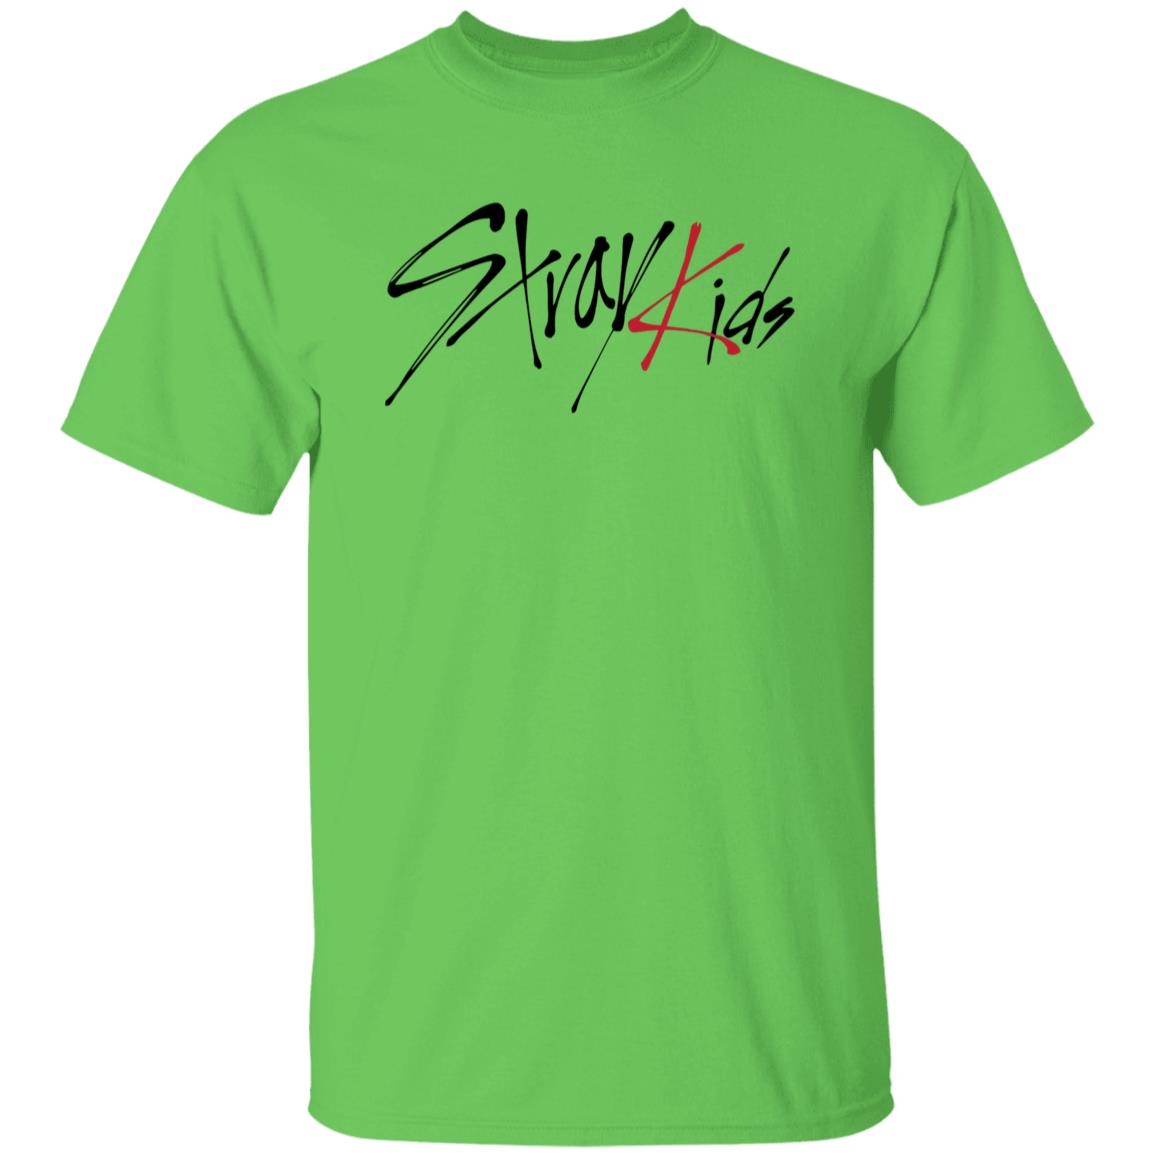 Stray Kids T-Shirt